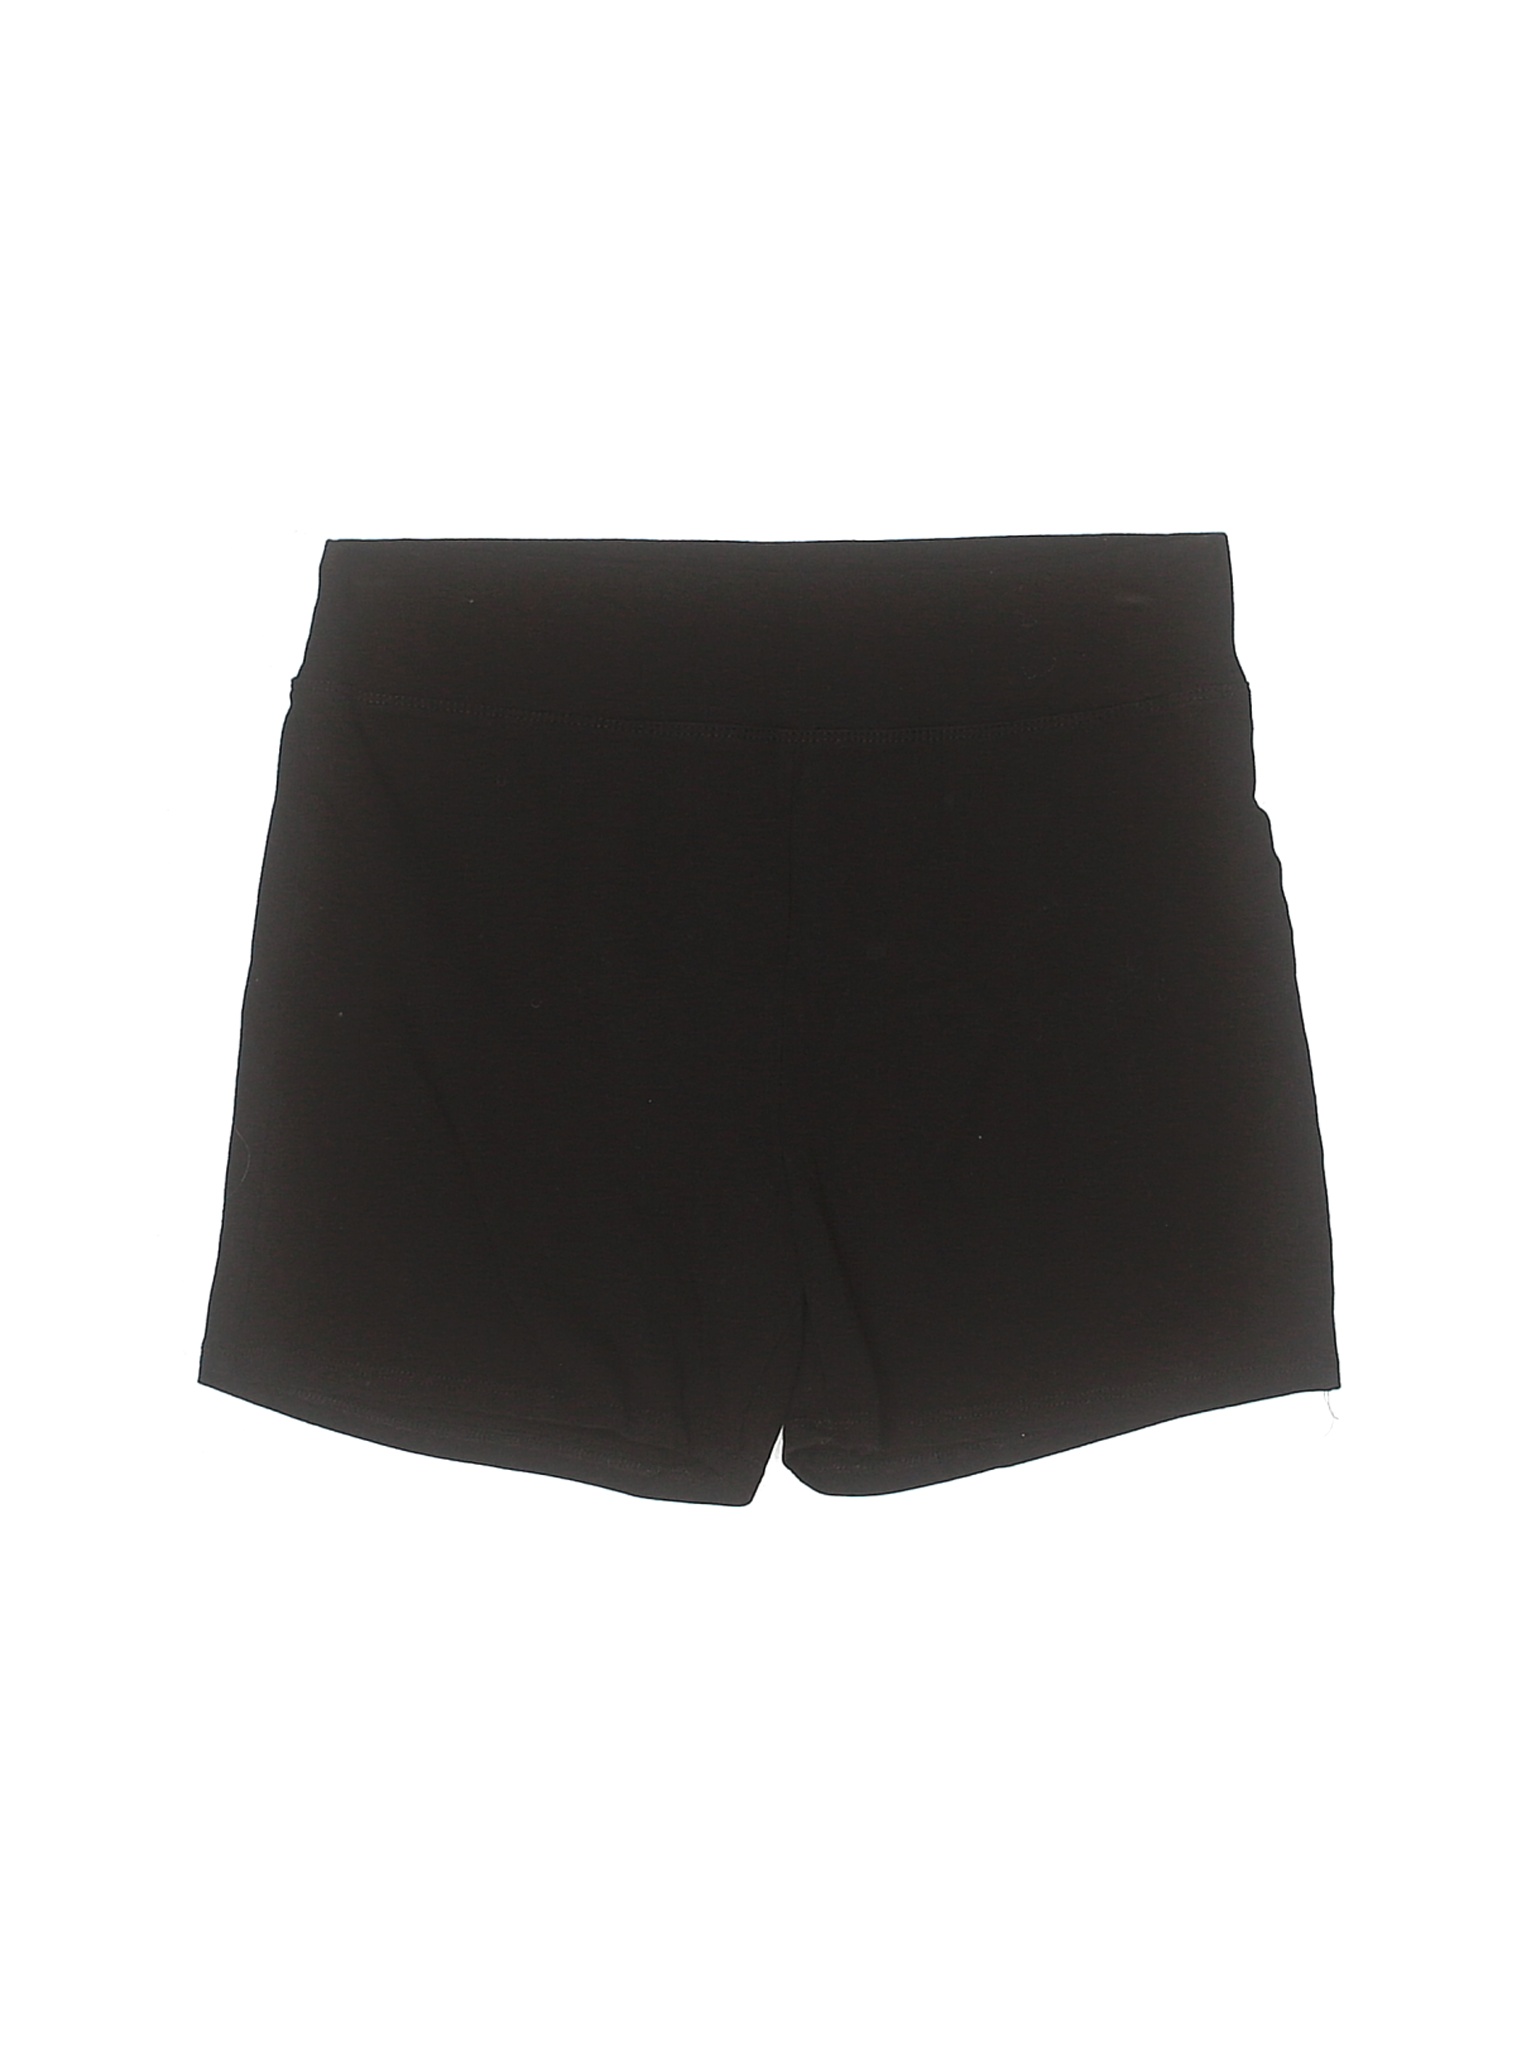 Zenana Premium Women Black Shorts L | eBay